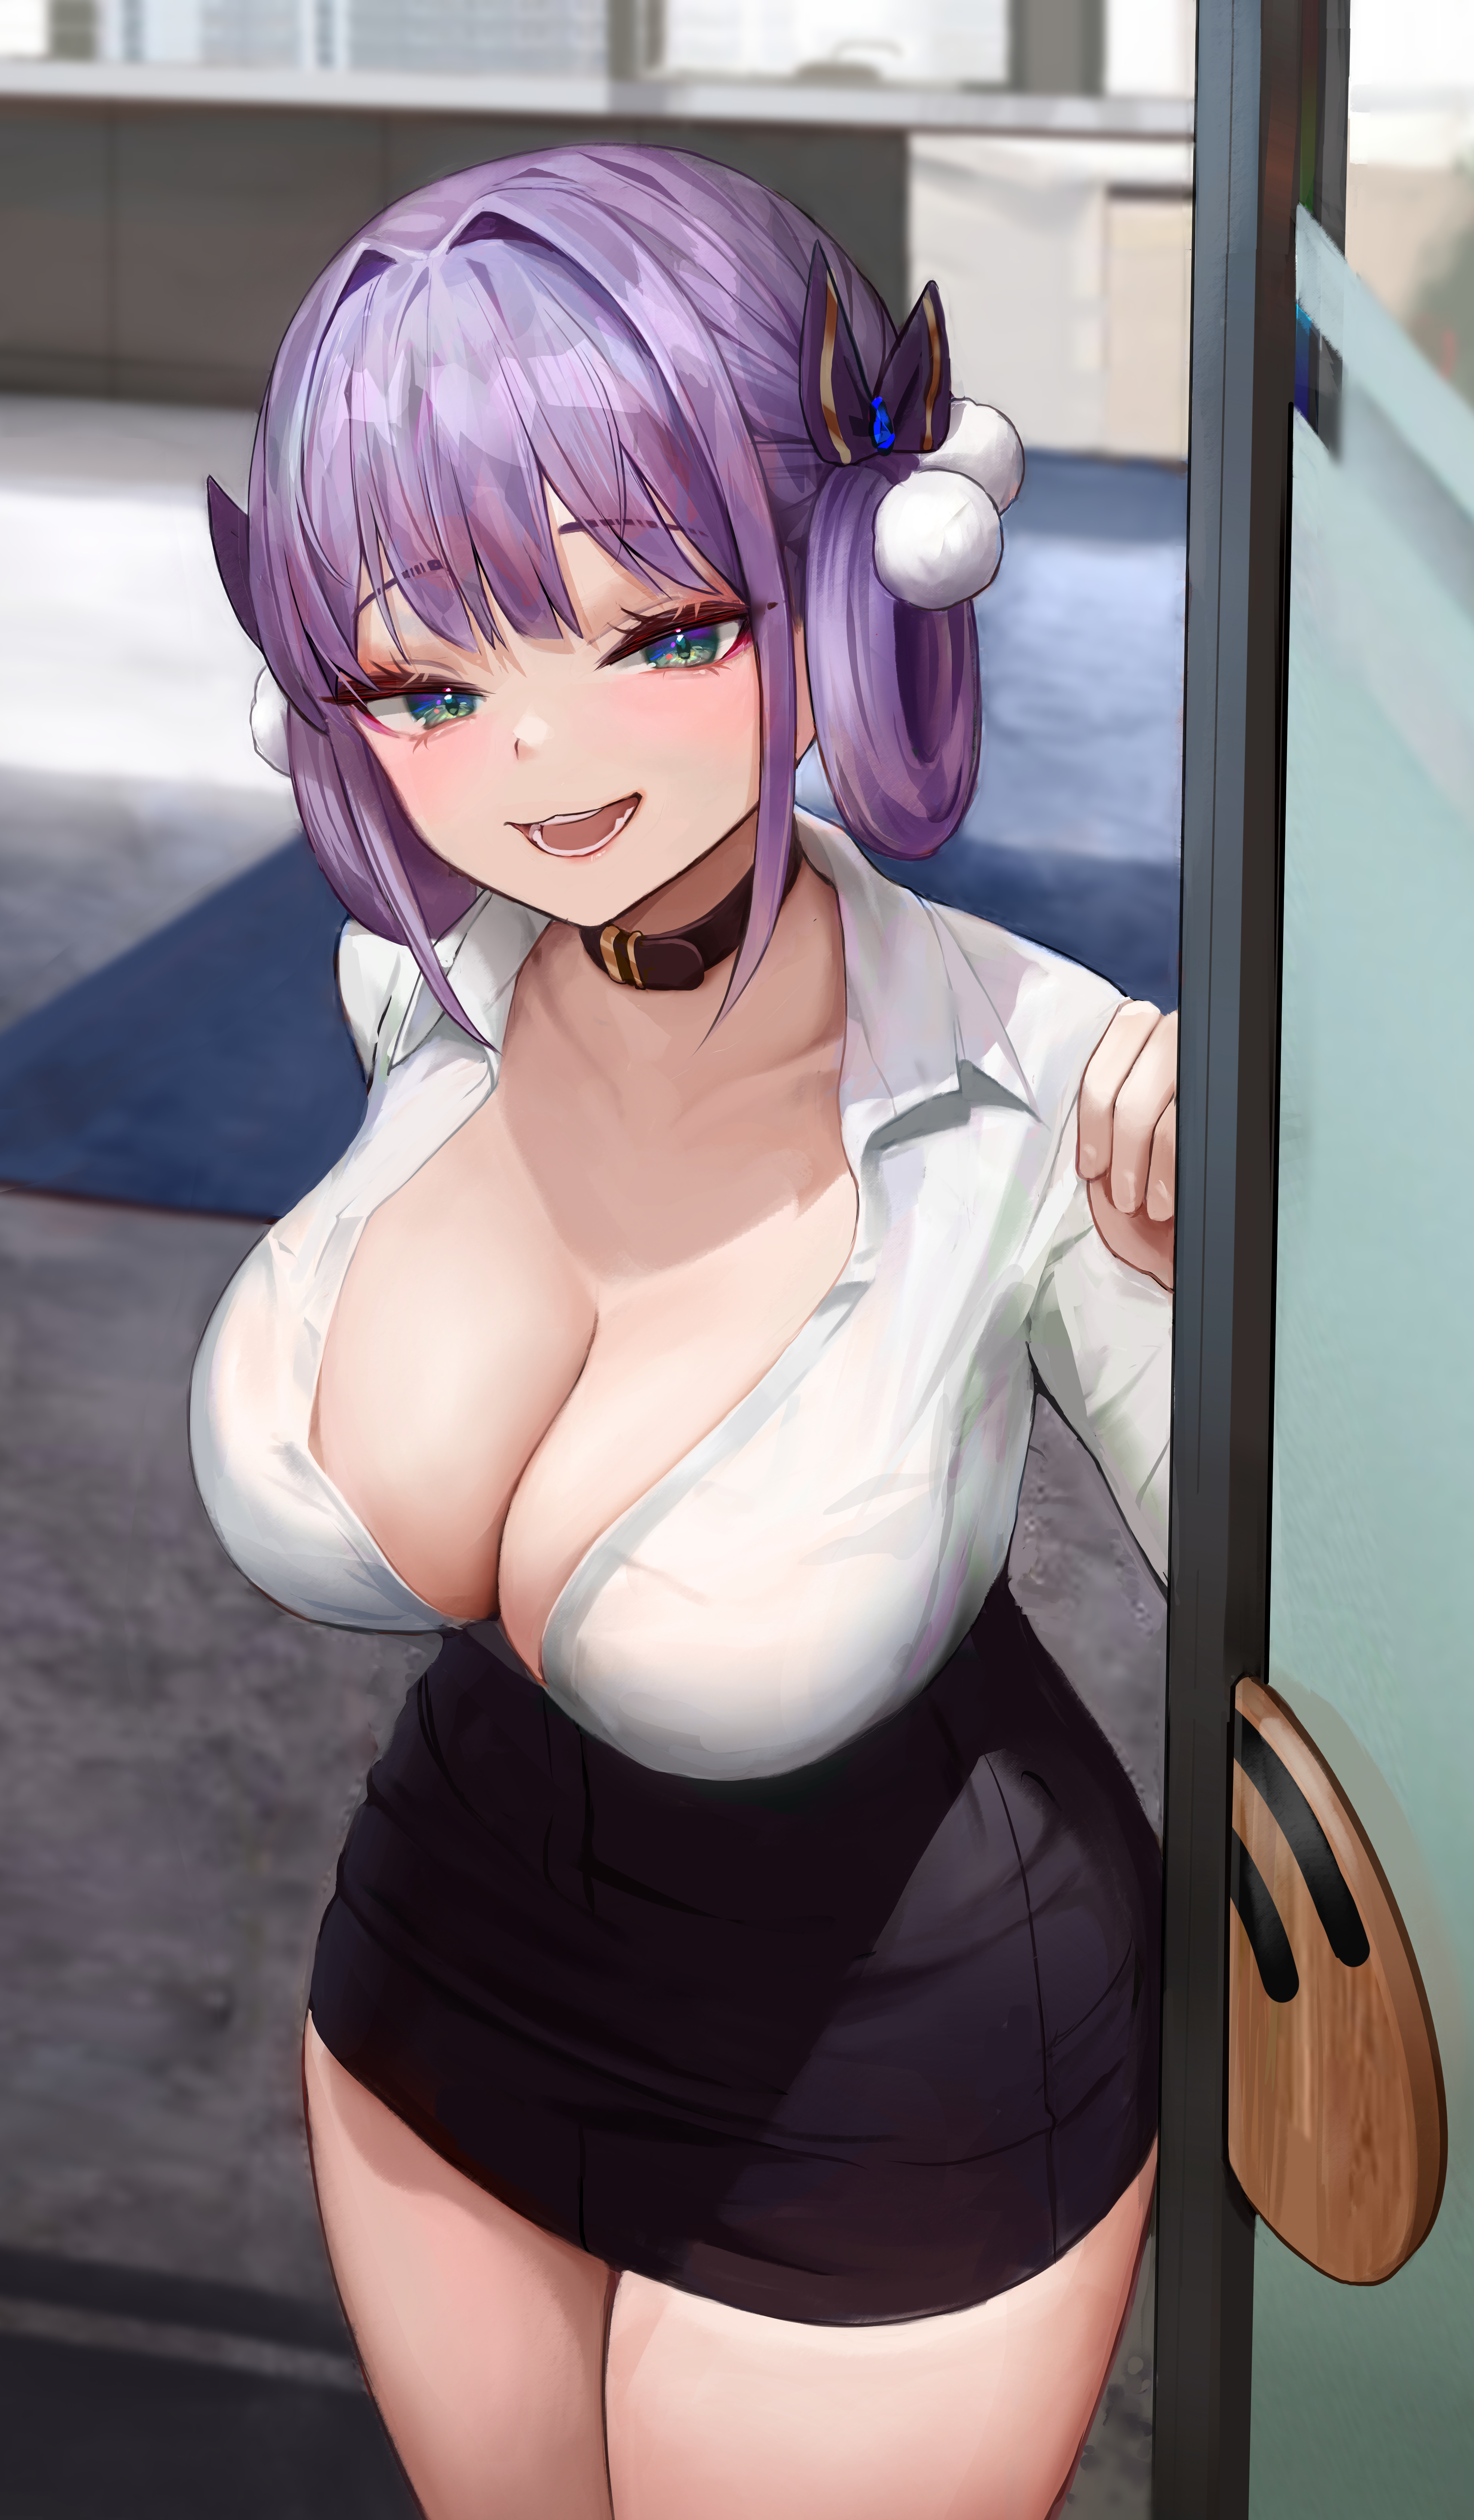 Anime 3940x6736 anime anime girls big boobs cleavage Amethyst0 artwork